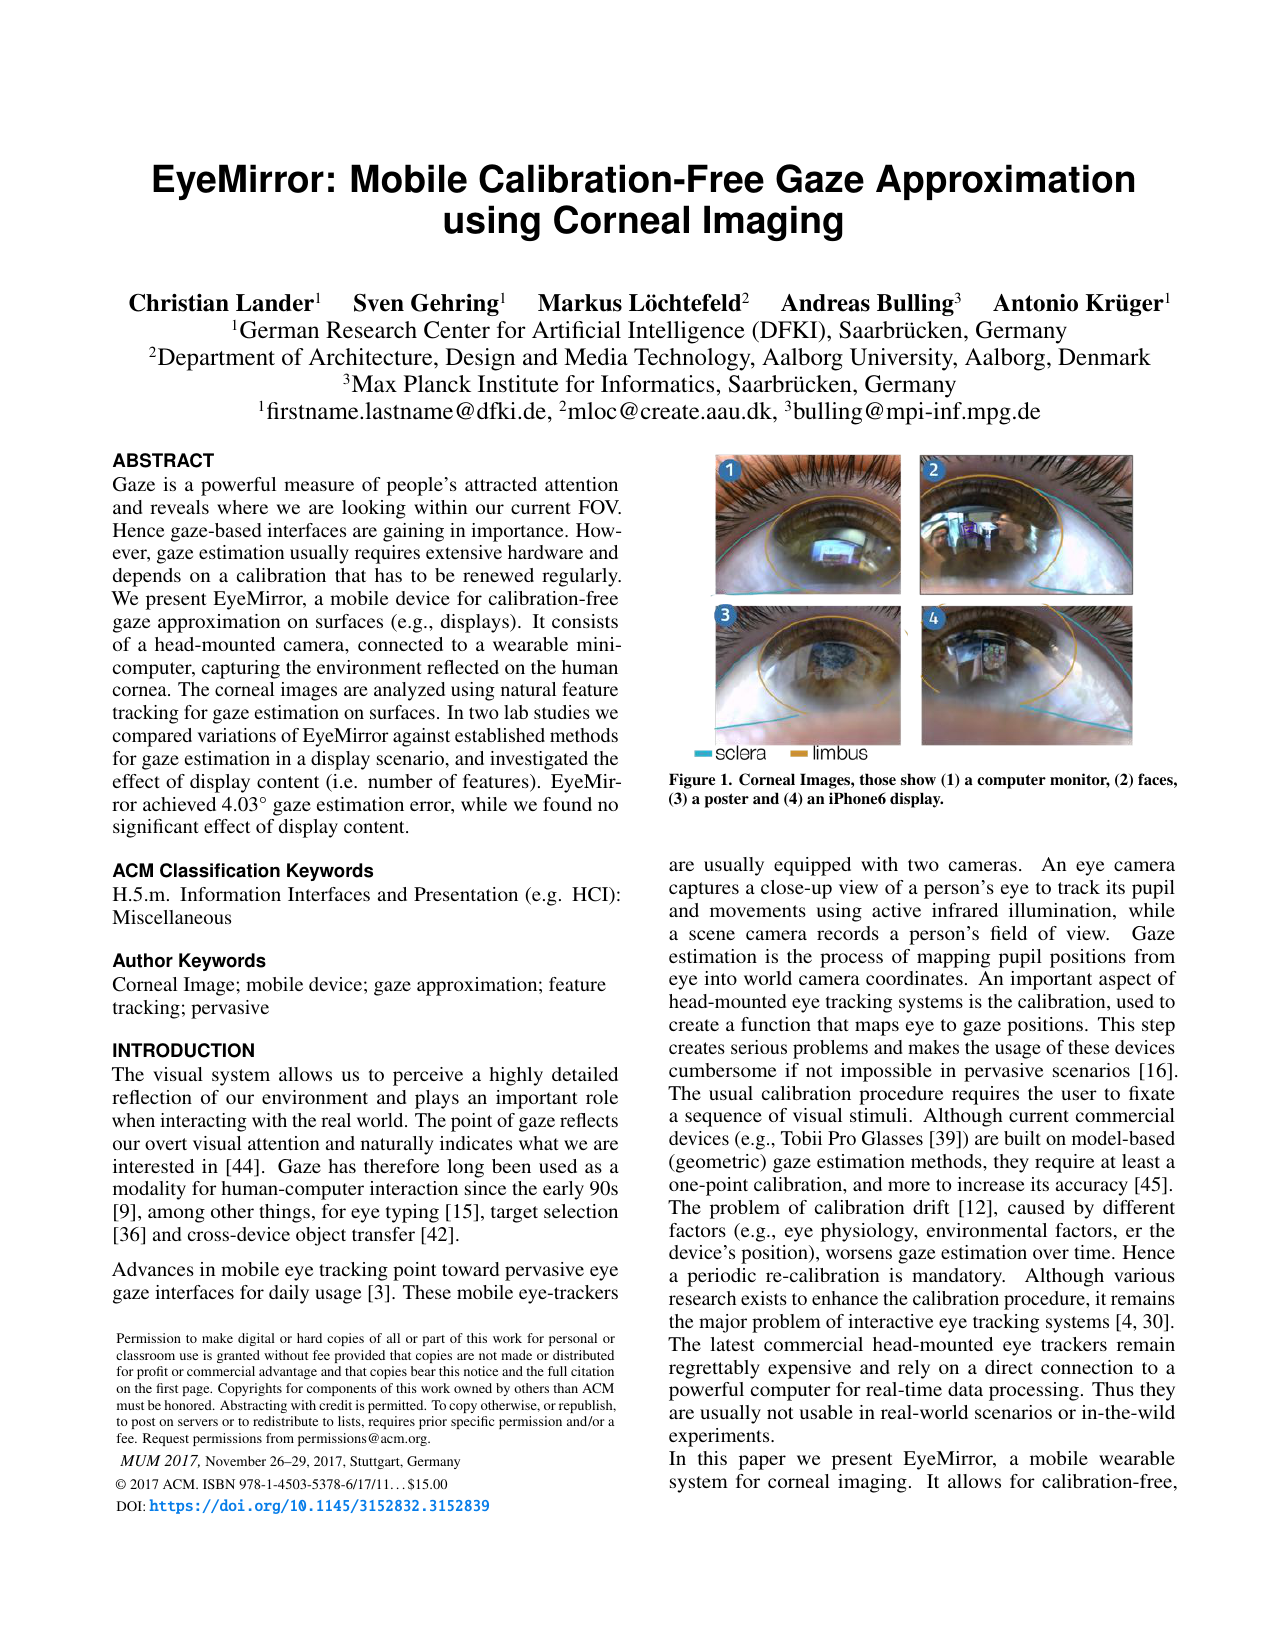 EyeMirror: Mobile Calibration-Free Gaze Approximation using Corneal Imaging